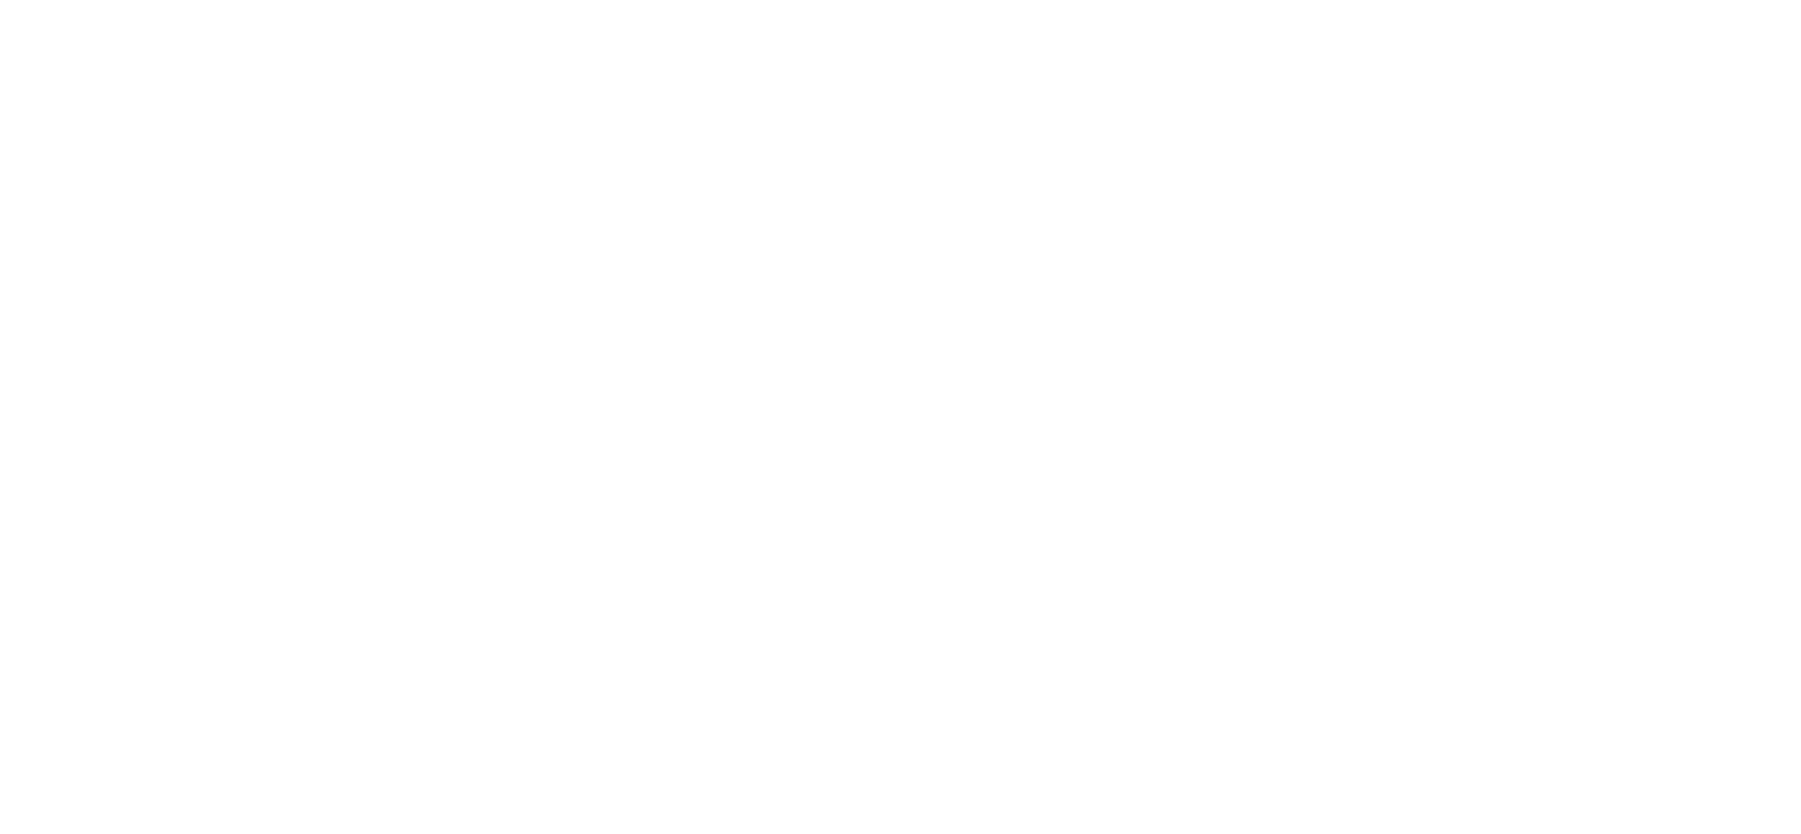 Zell Early Warning Logo - Introducing Zelle